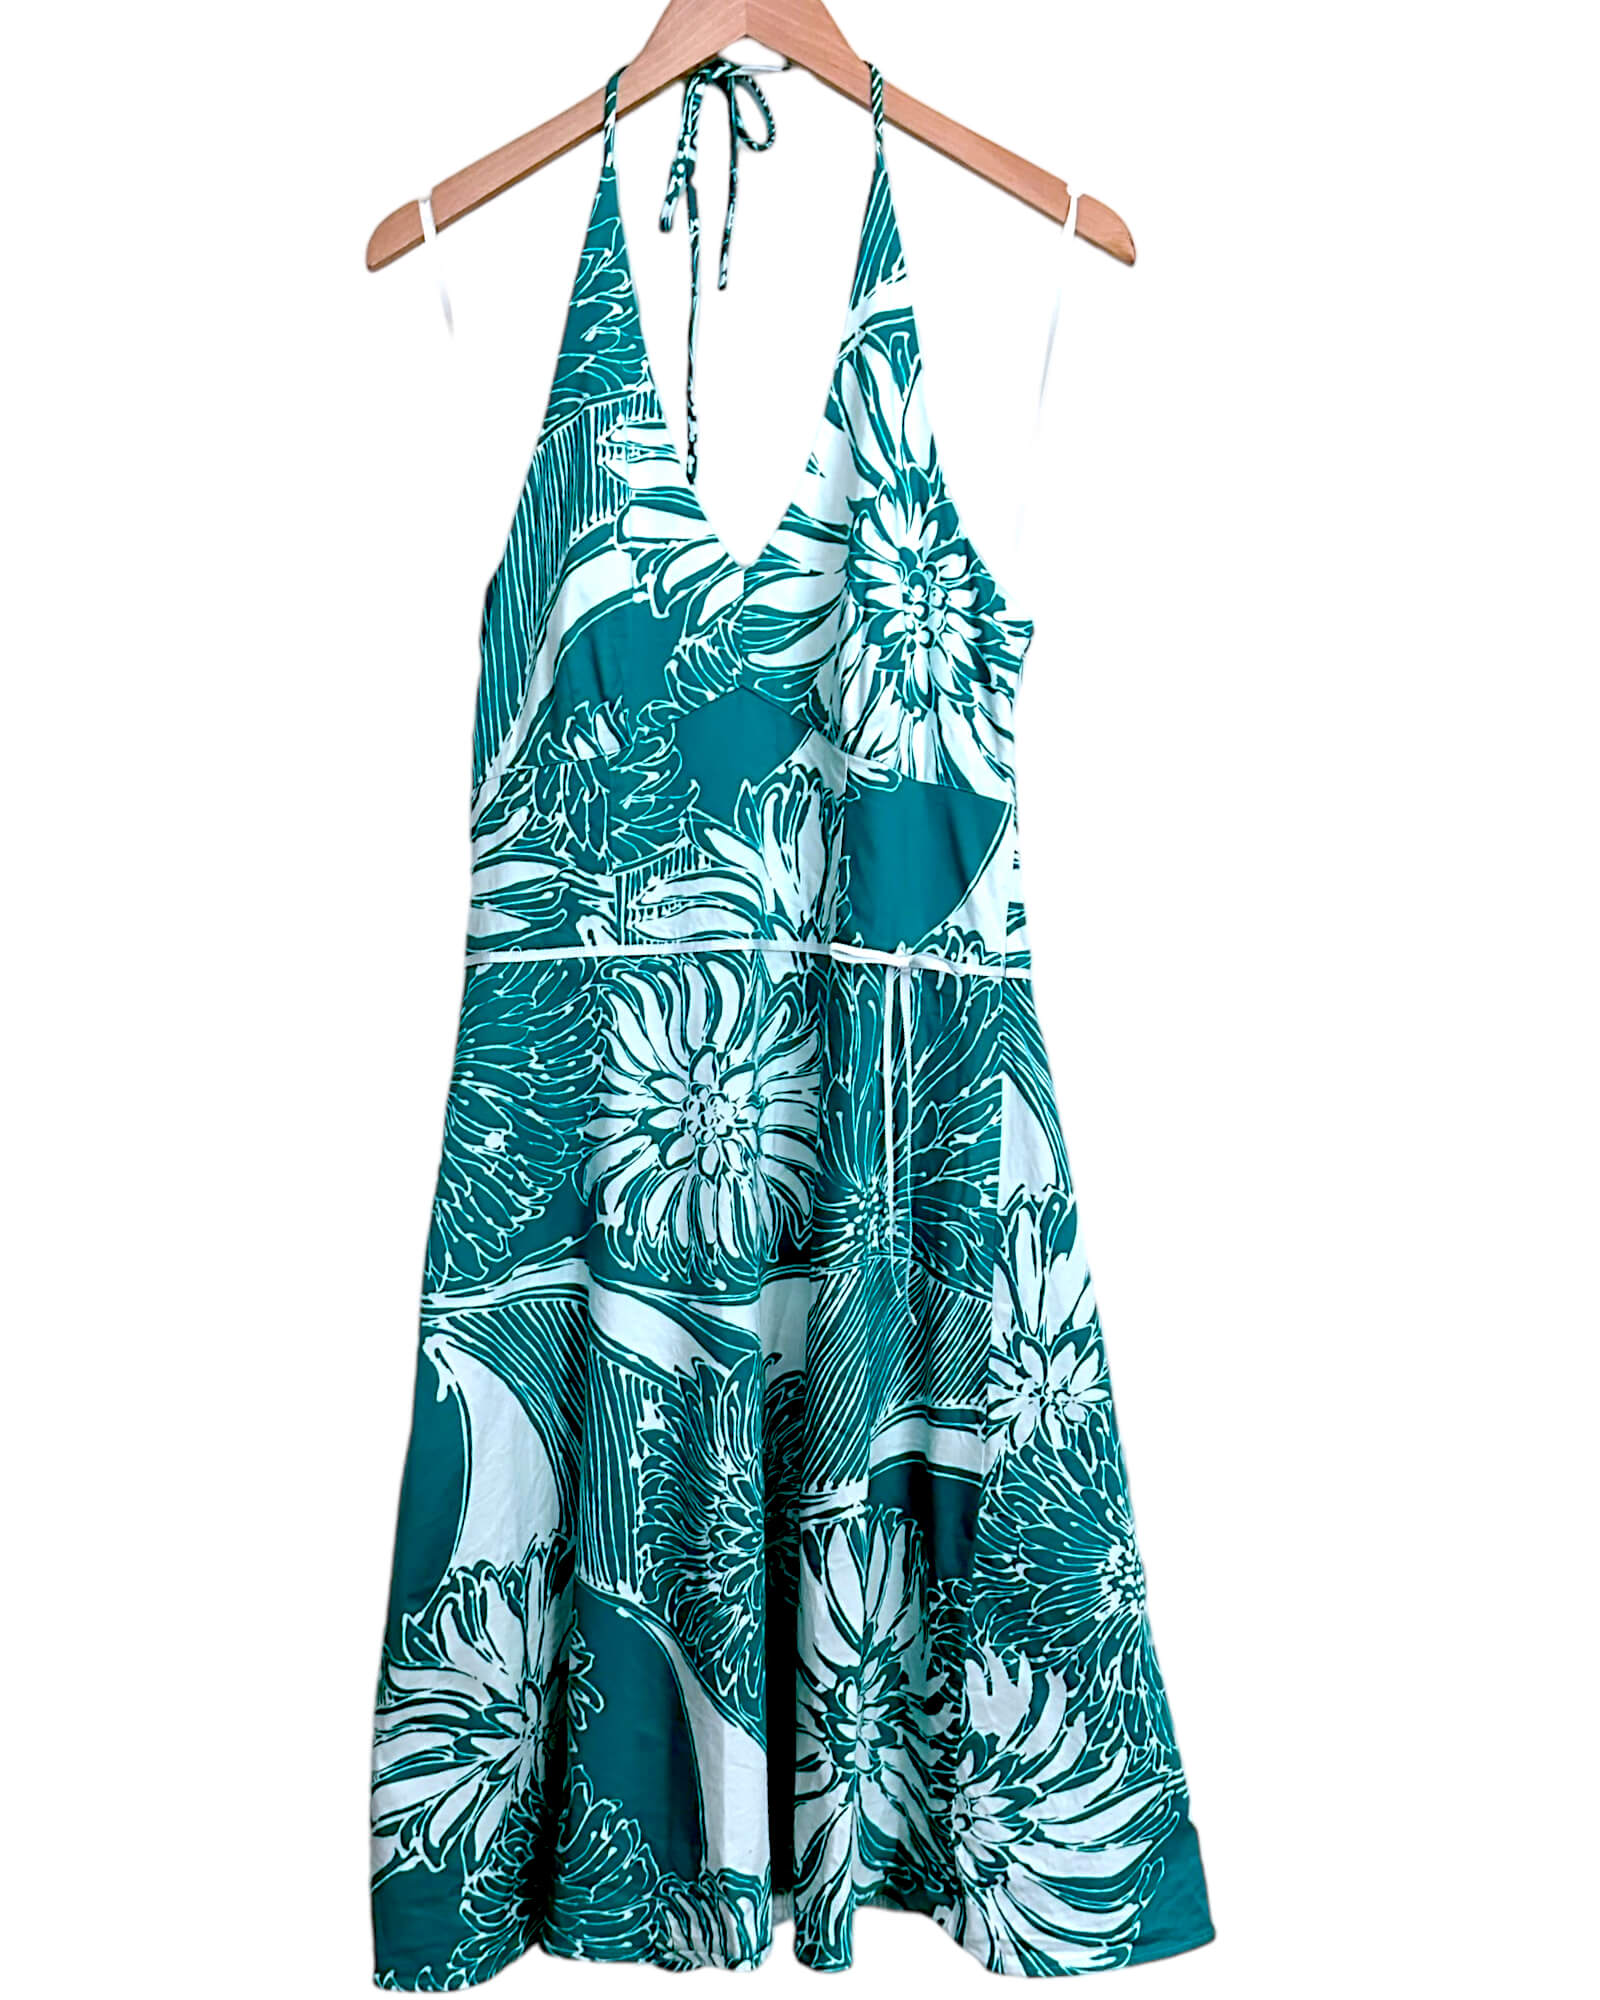 Ann Taylor Silk Habotai Getaway Dress size 14 length 27”